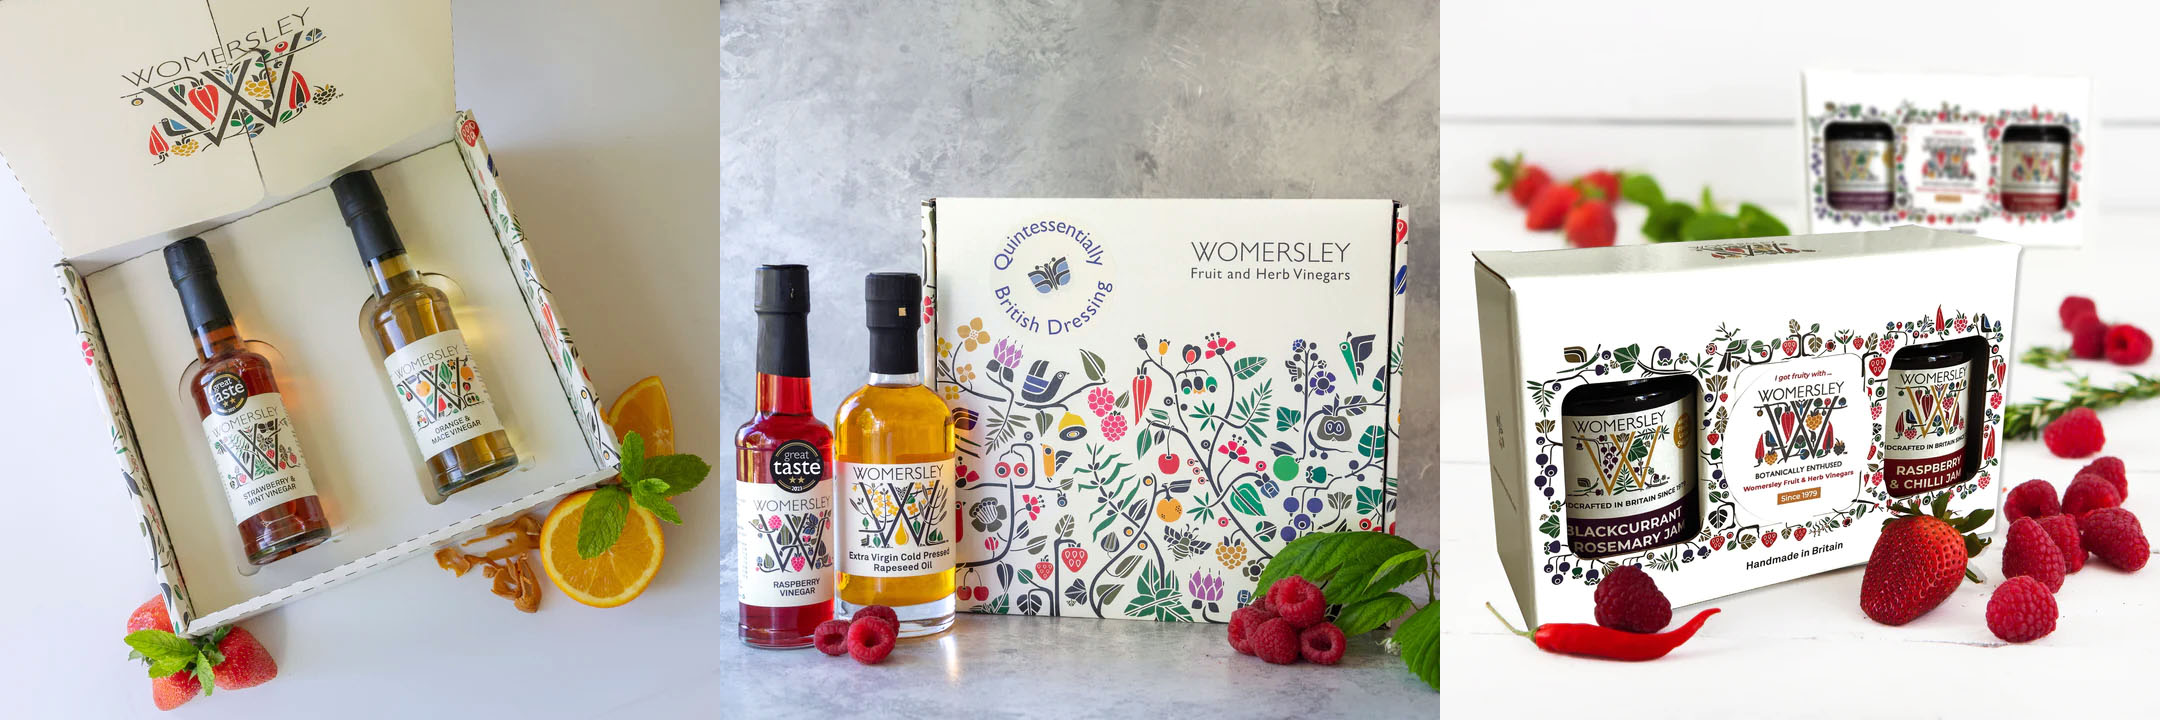 Womersley Foods Fruit Vinegar Gifts 4 – The Artisan Food Trail